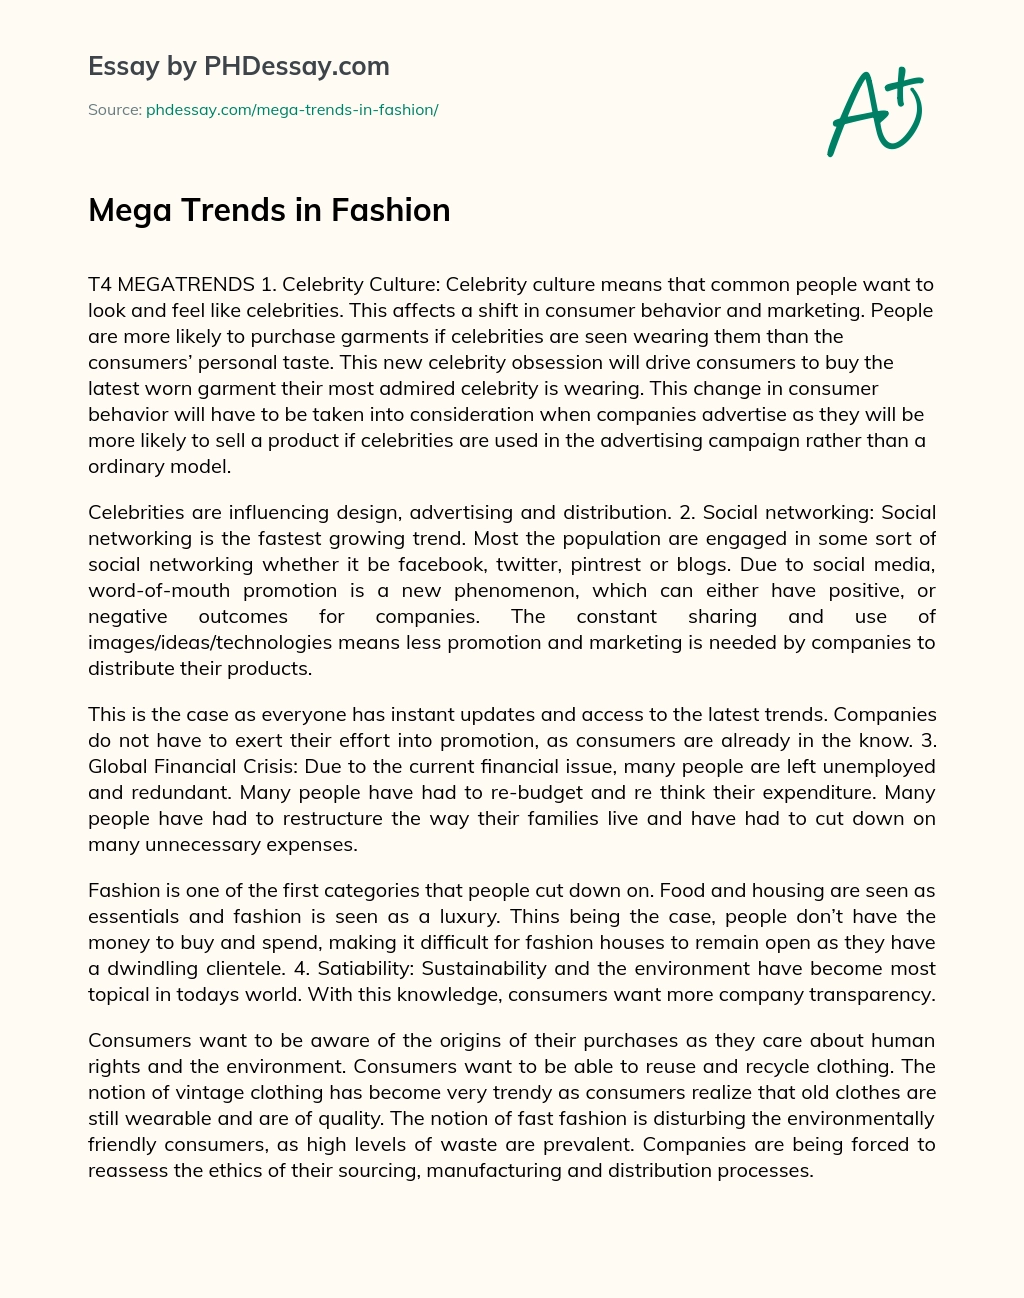 Mega Trends in Fashion essay